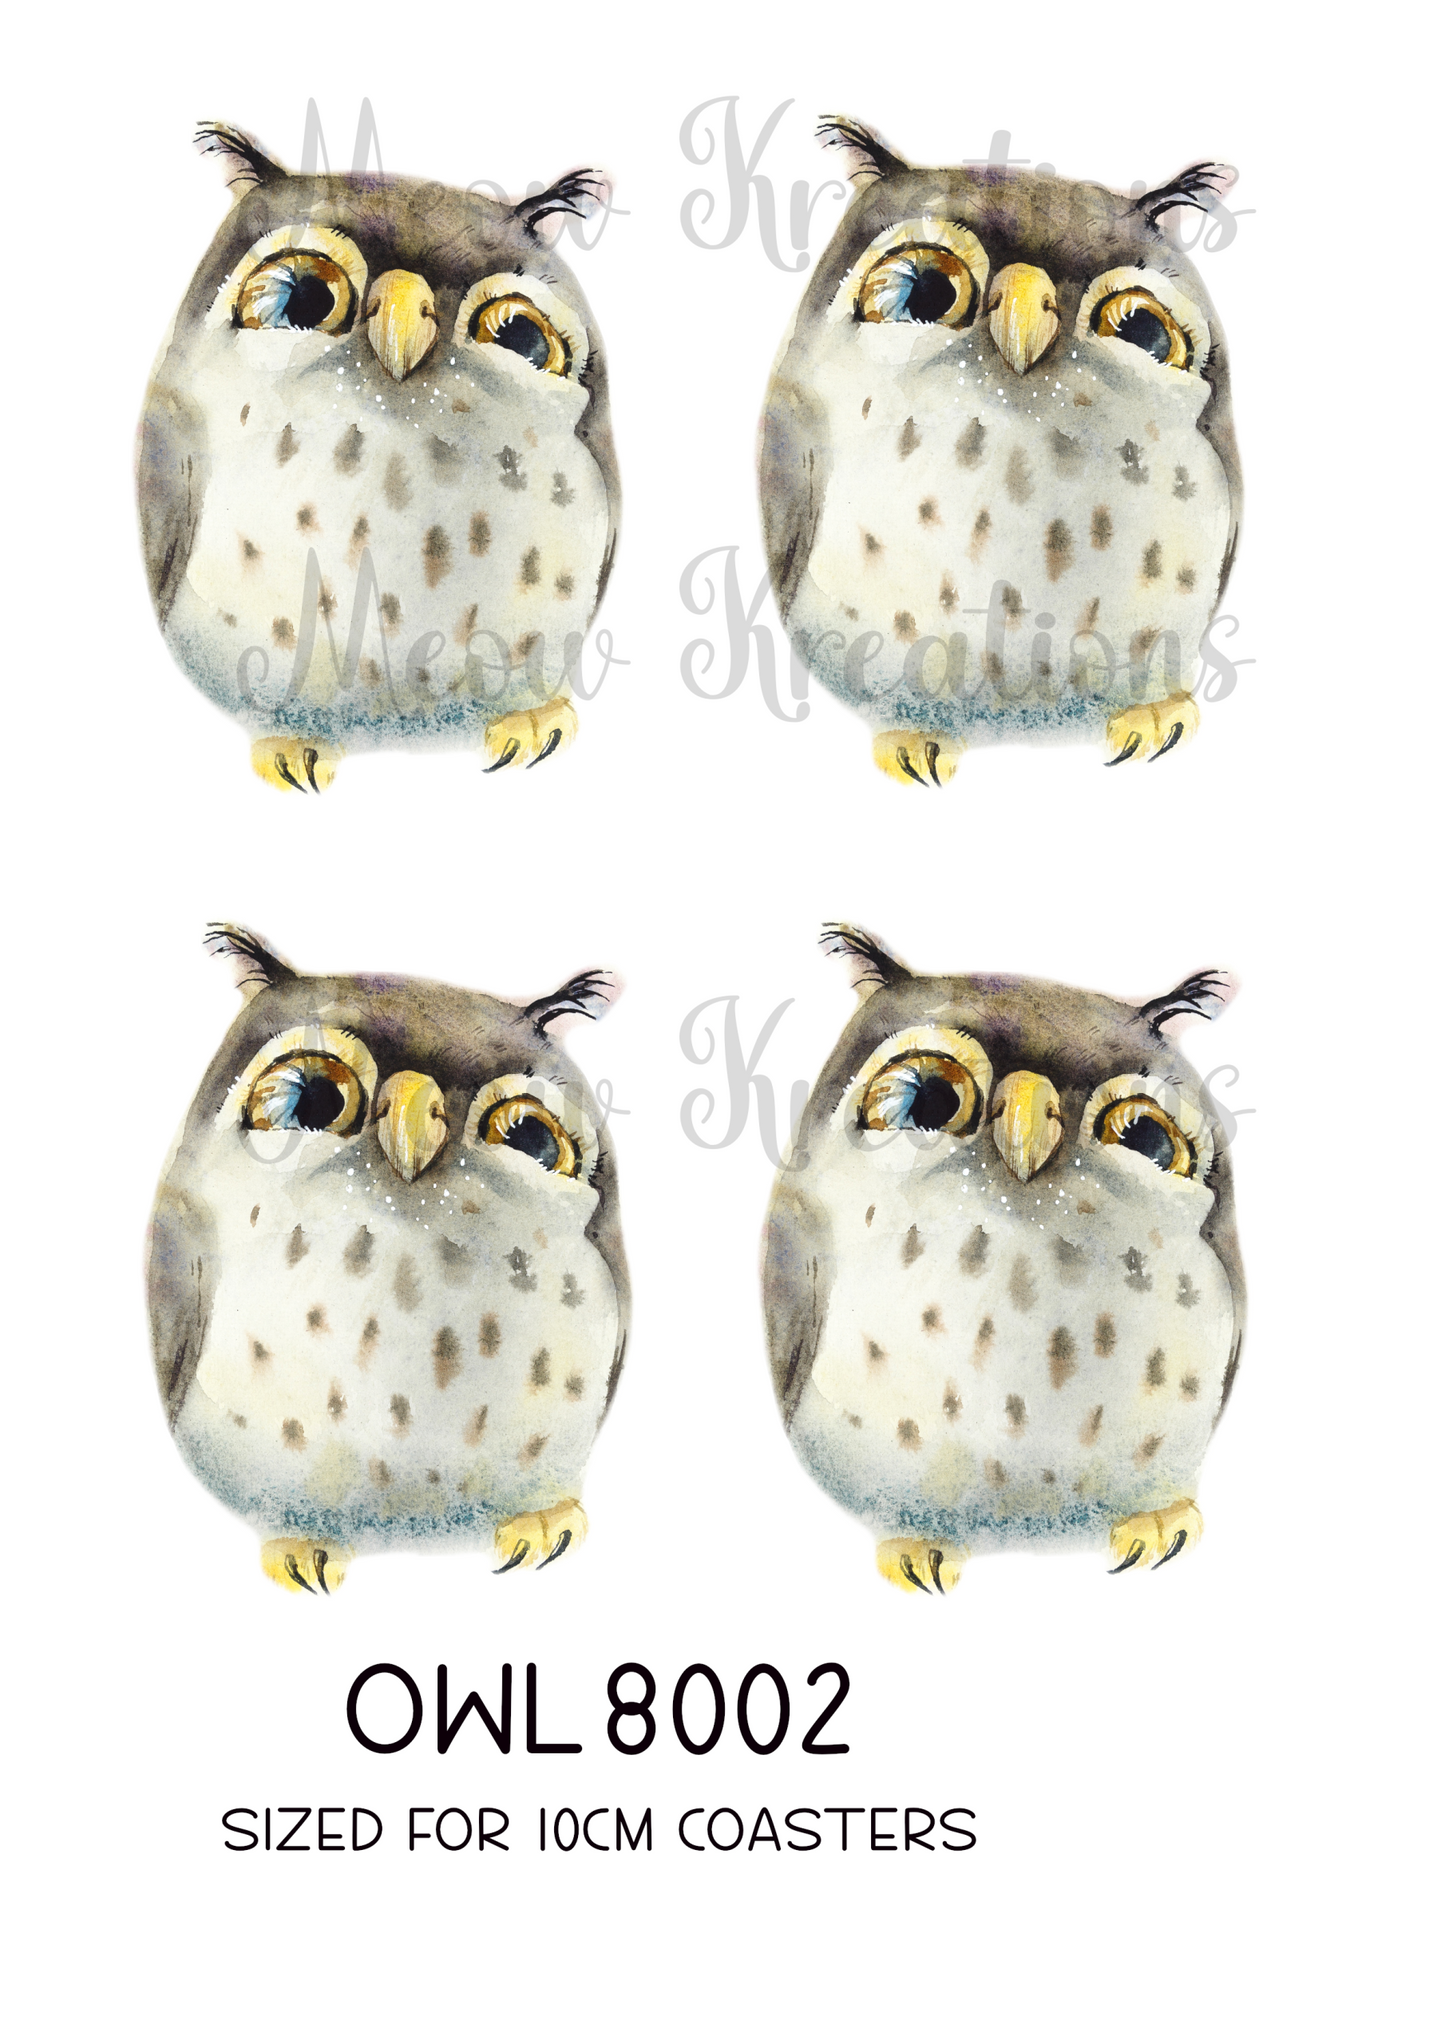 OWL 8002